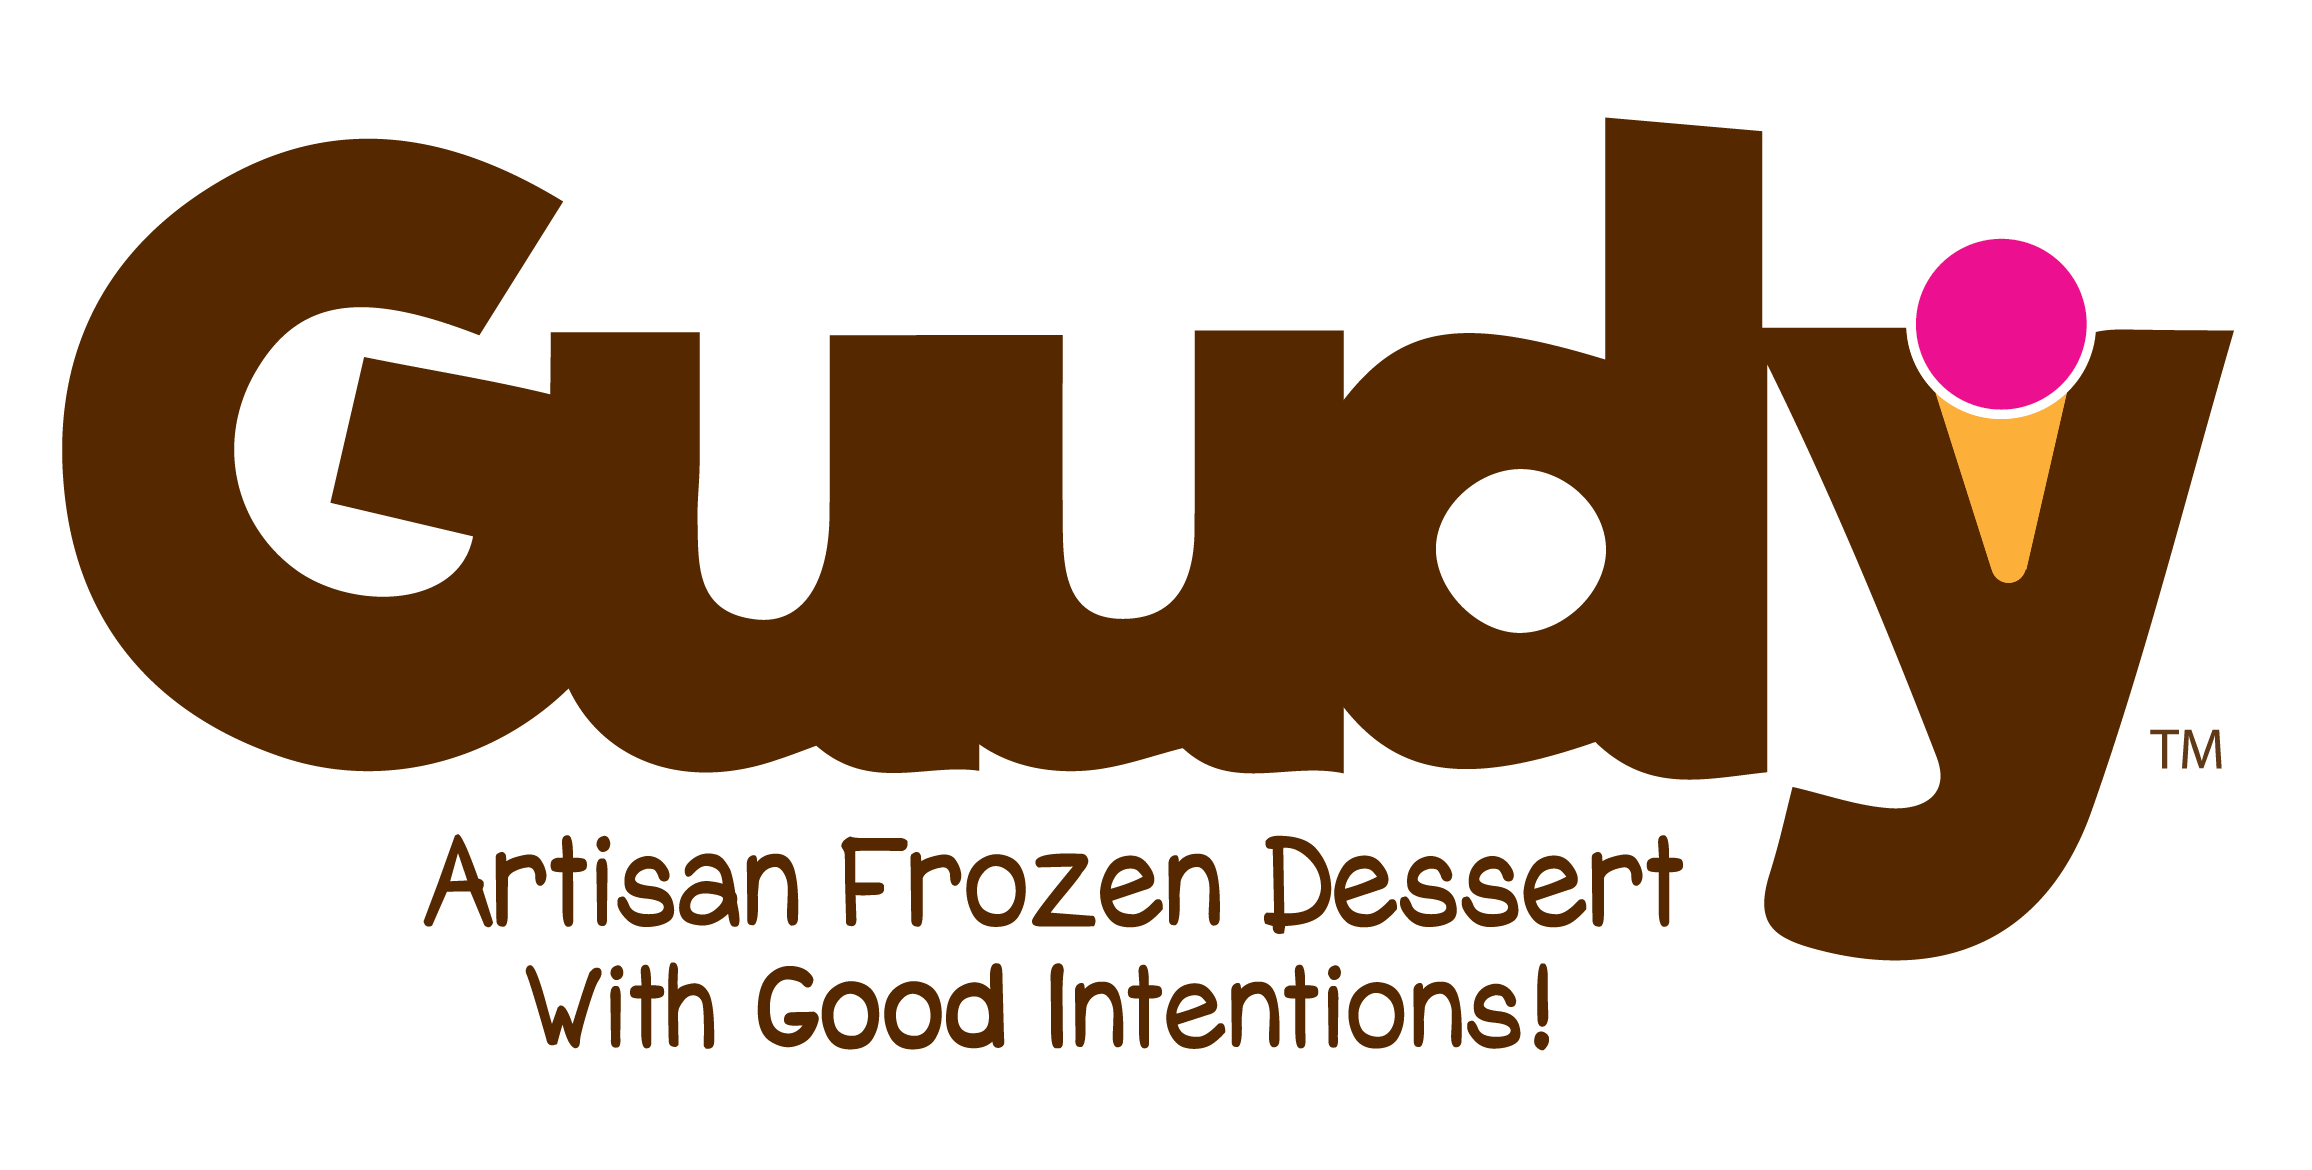 Guudy Ice Cream